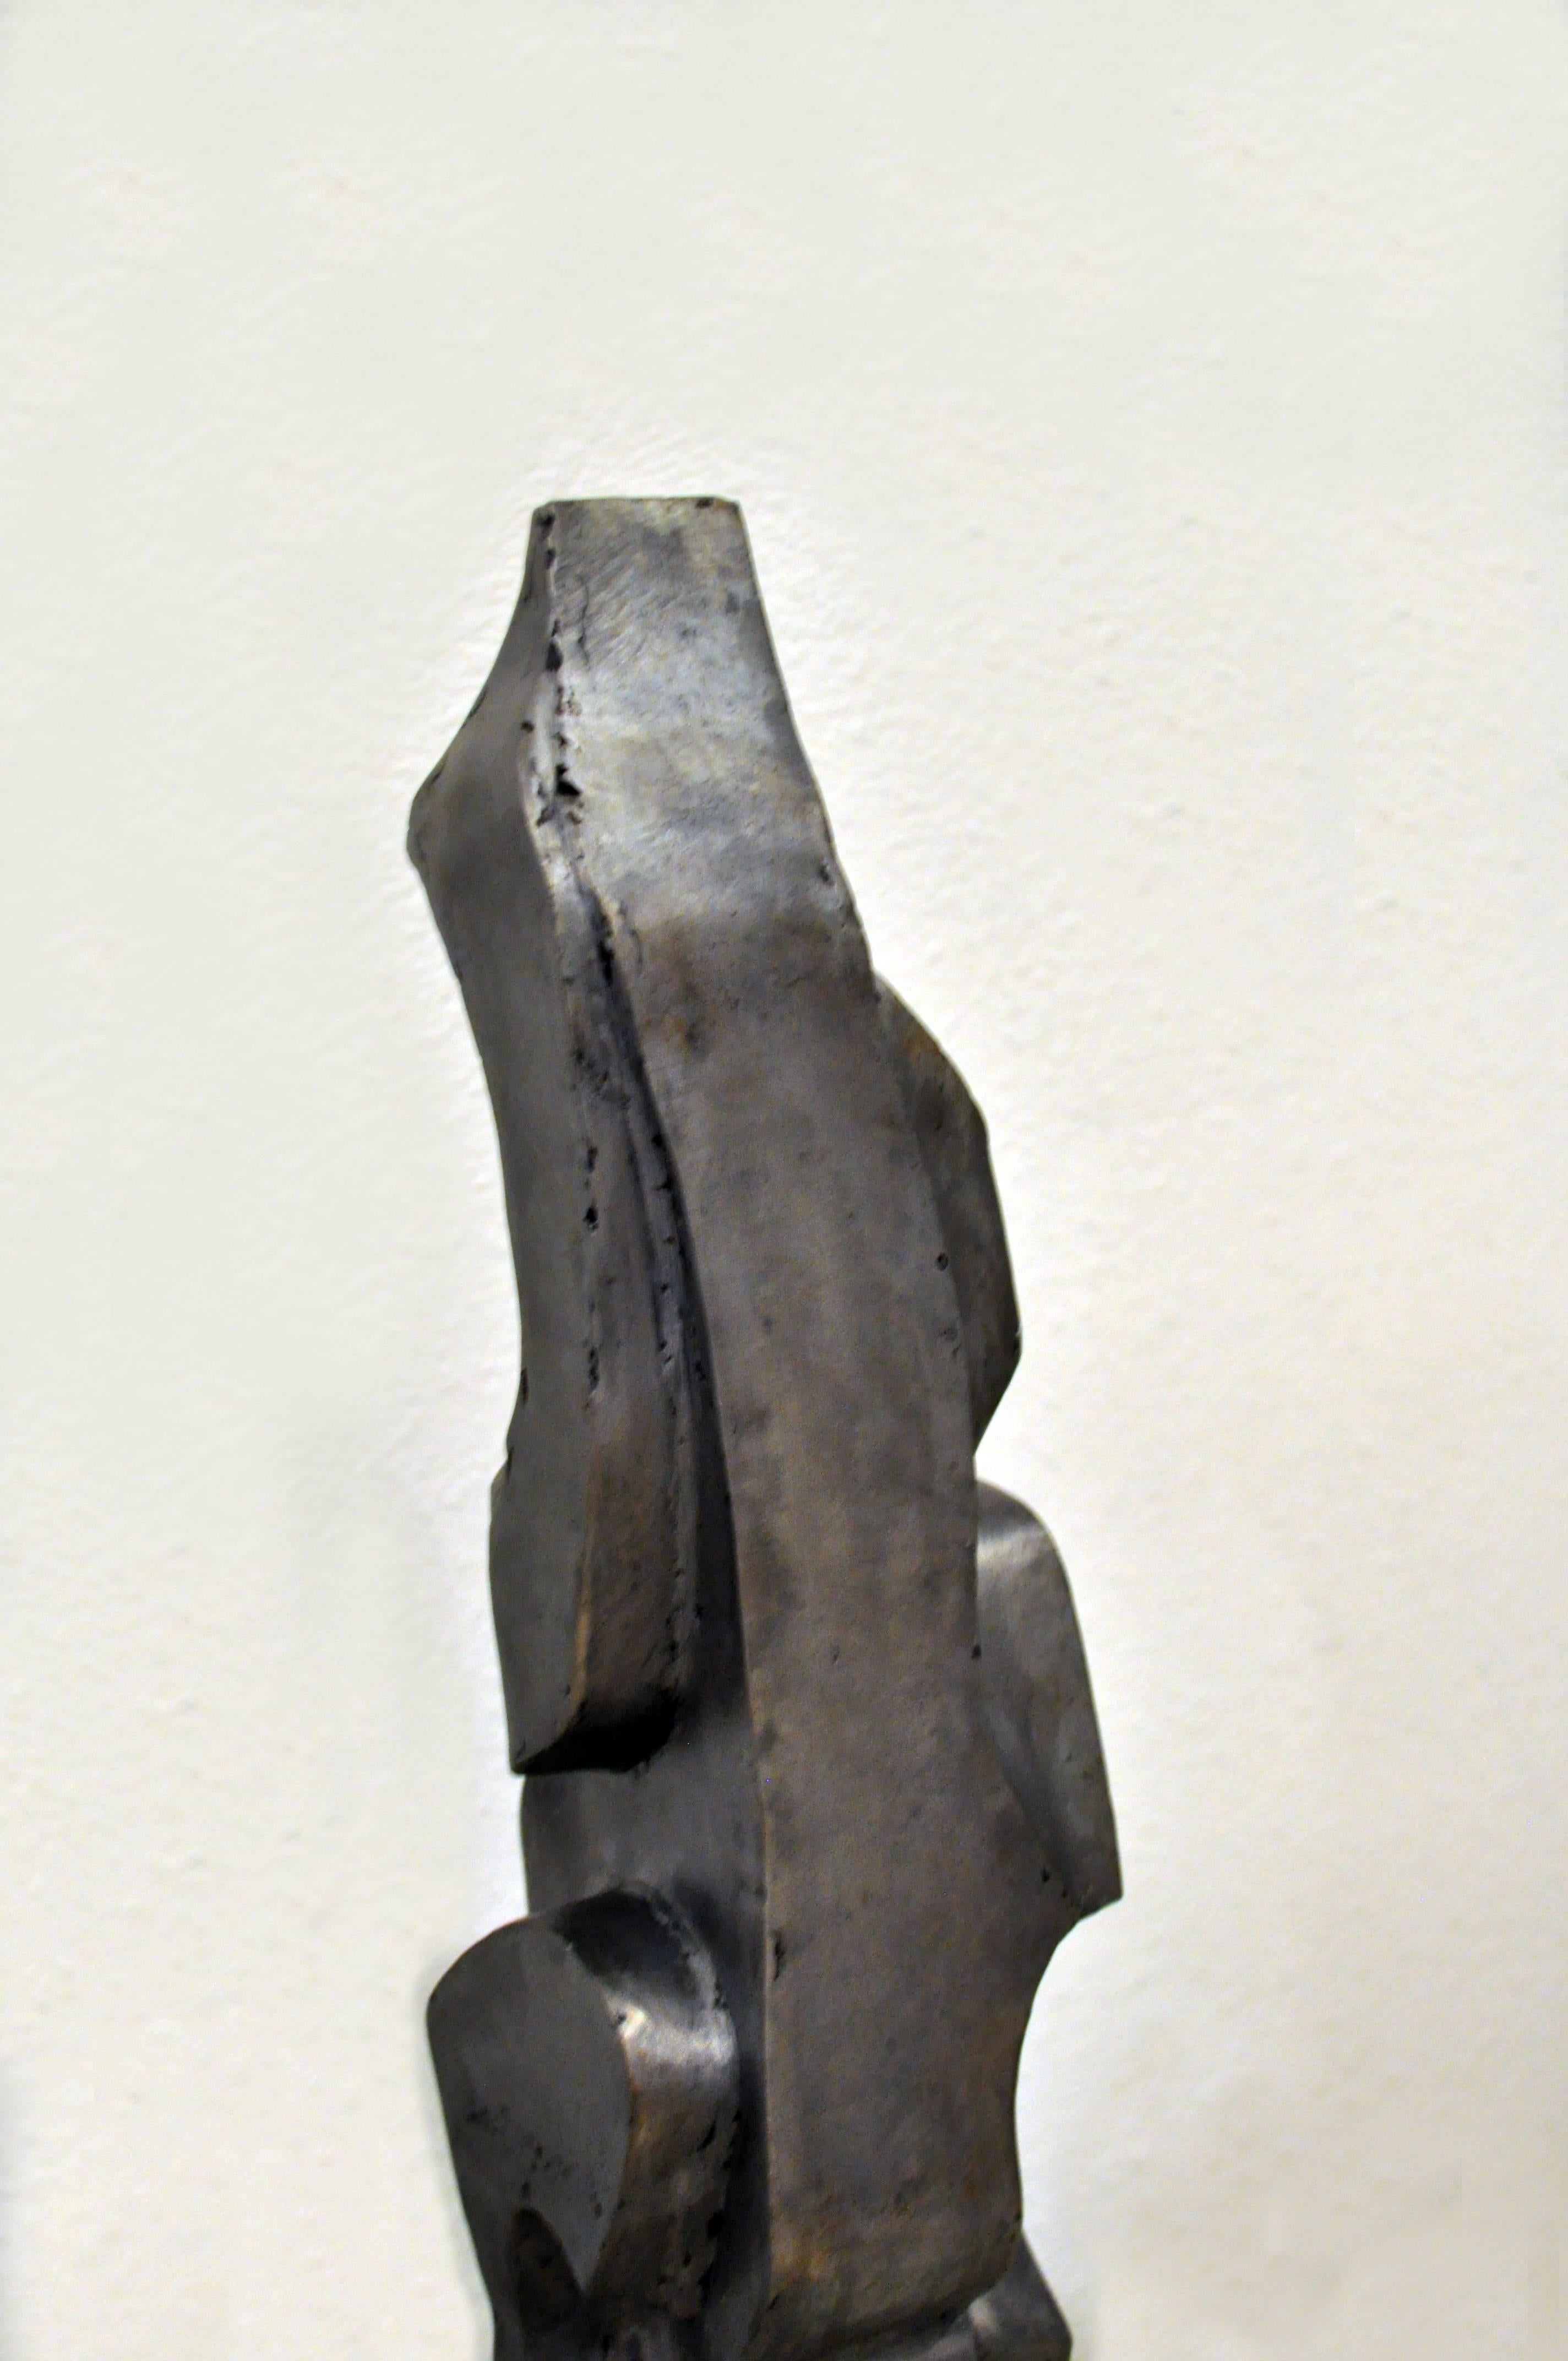 American Abstract Steel Sculpture Titled Steel Avatar by Artist Scott Donadio